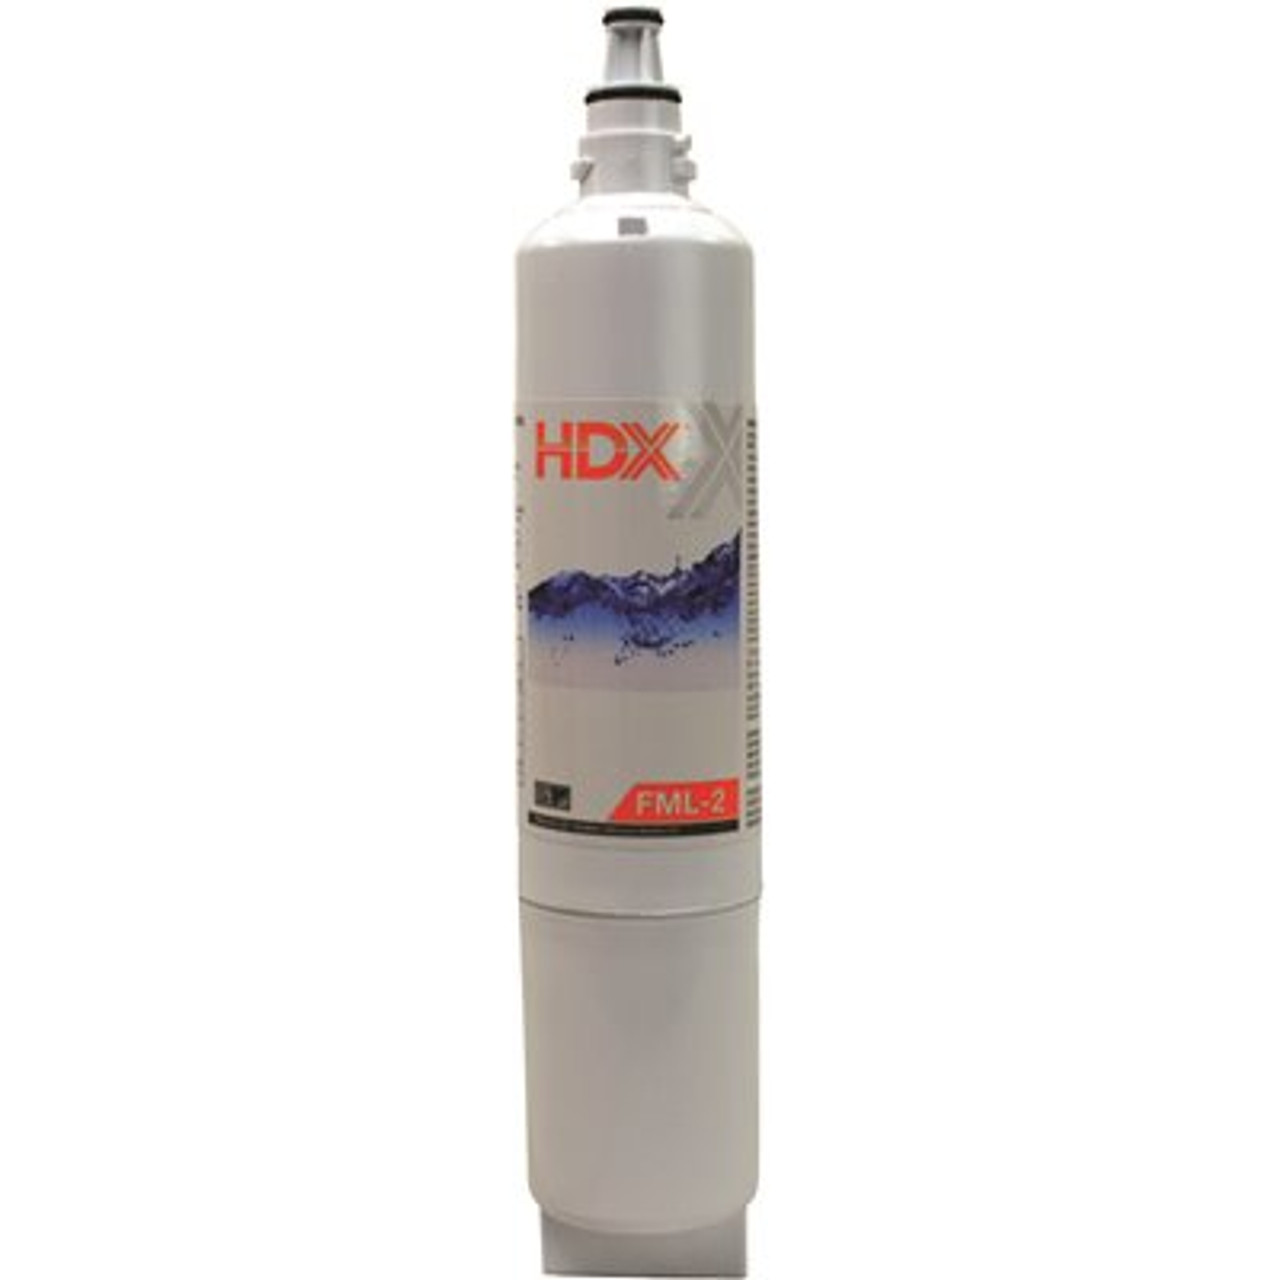 Hdx Fml-2 Premium Refrigerator Replacement Filter Fits Lg Lt600P